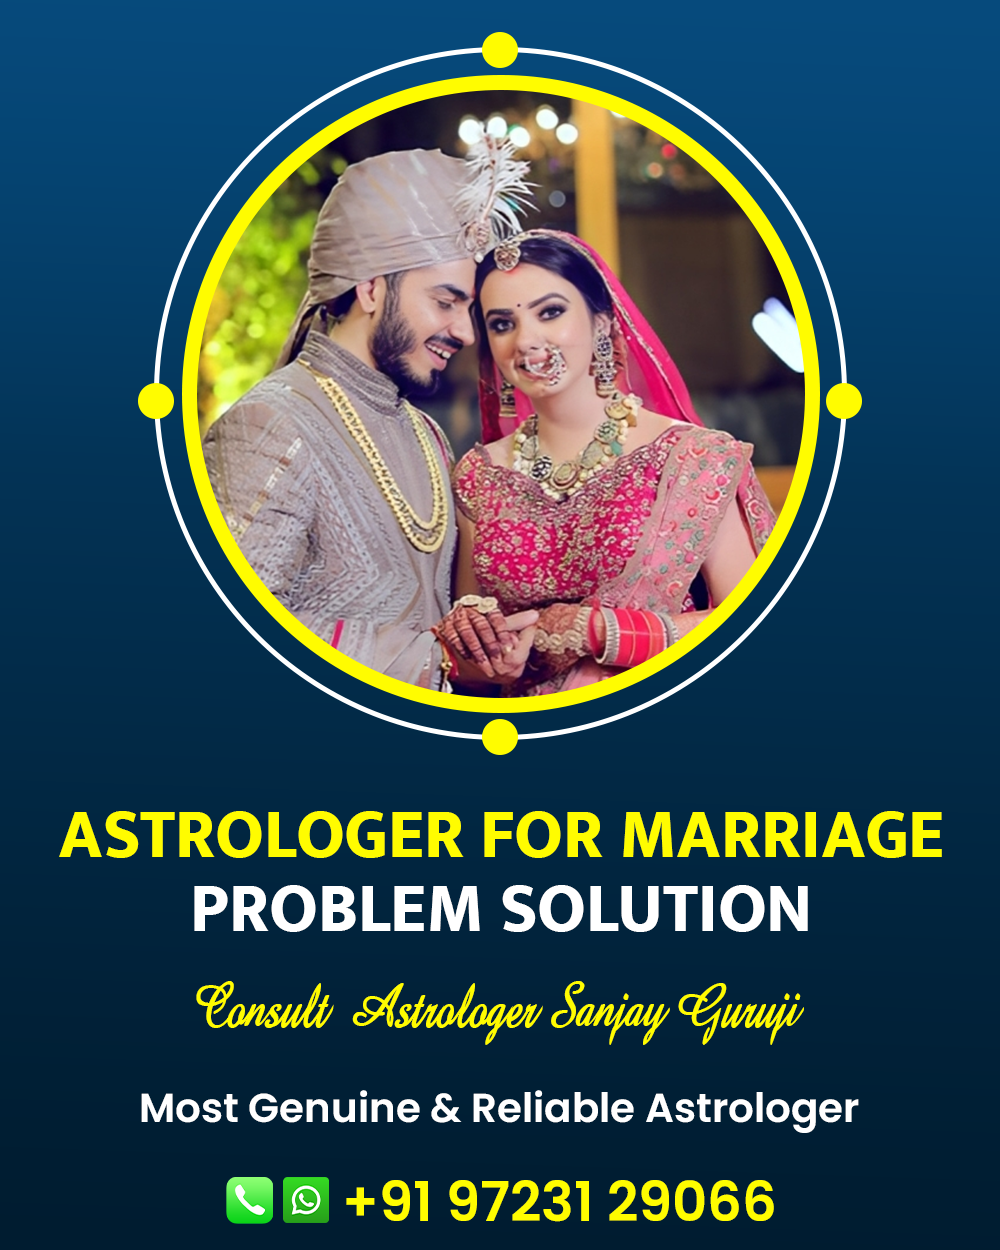 Love Astrologer